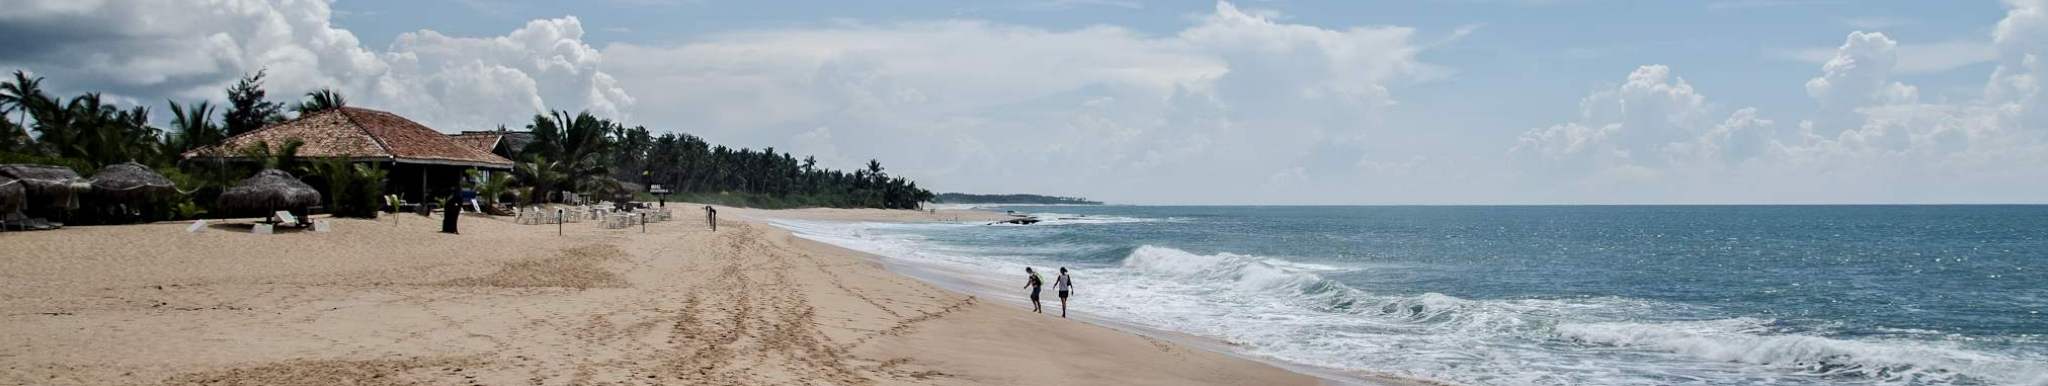 Marakolja Beach Sri Lanka